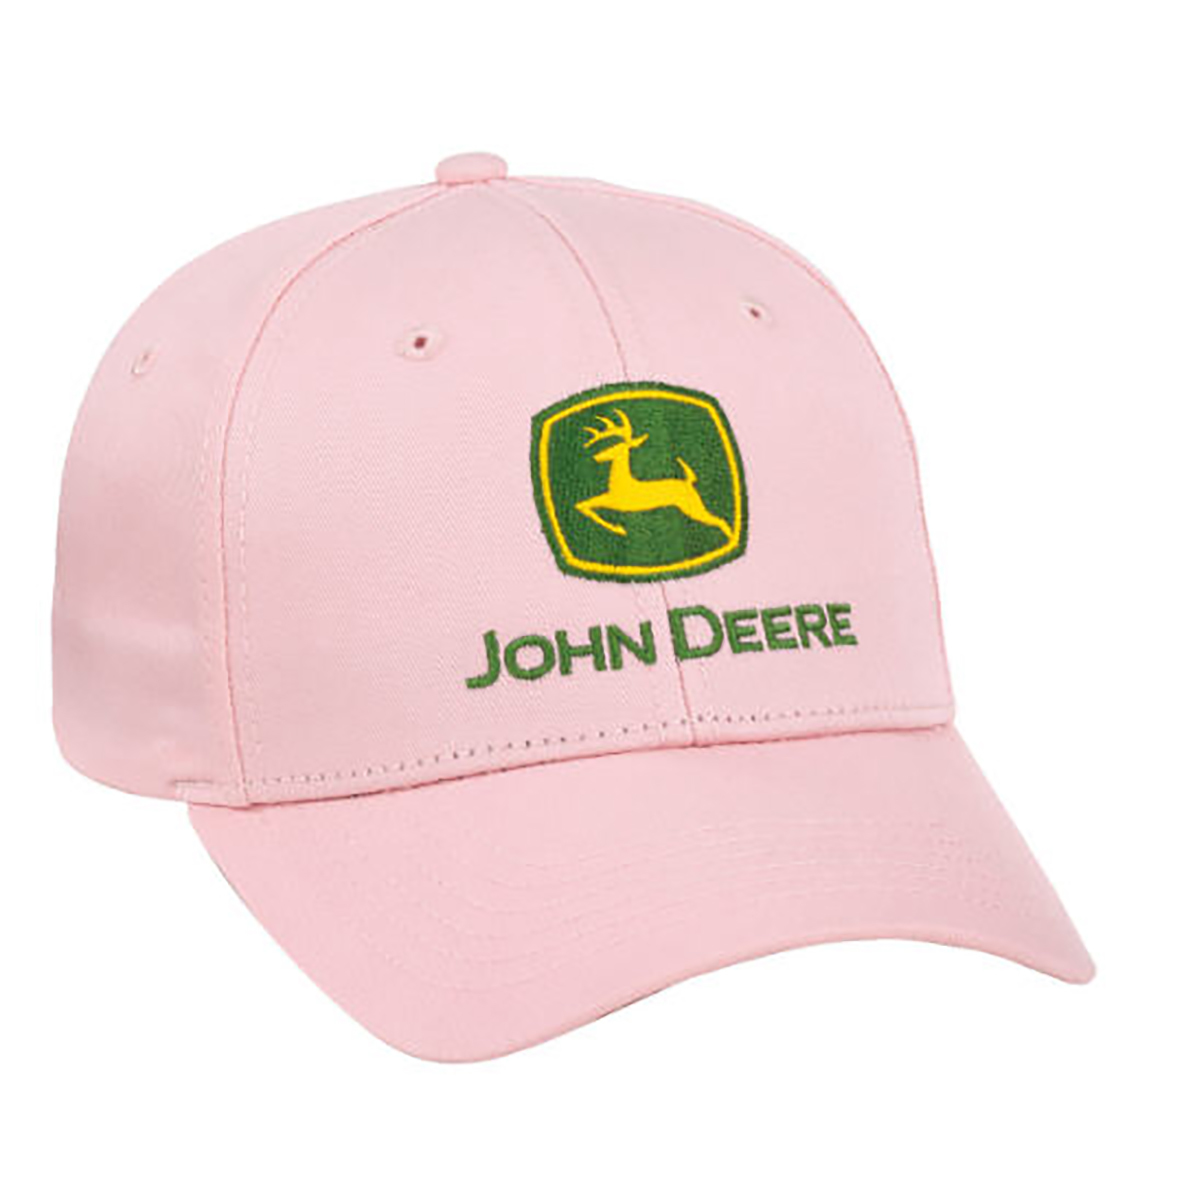 JOHN DEERE *LADIES* PINK & MAGENTA KNIT Stocking Cap CAP HAT *BRAND NEW!* 